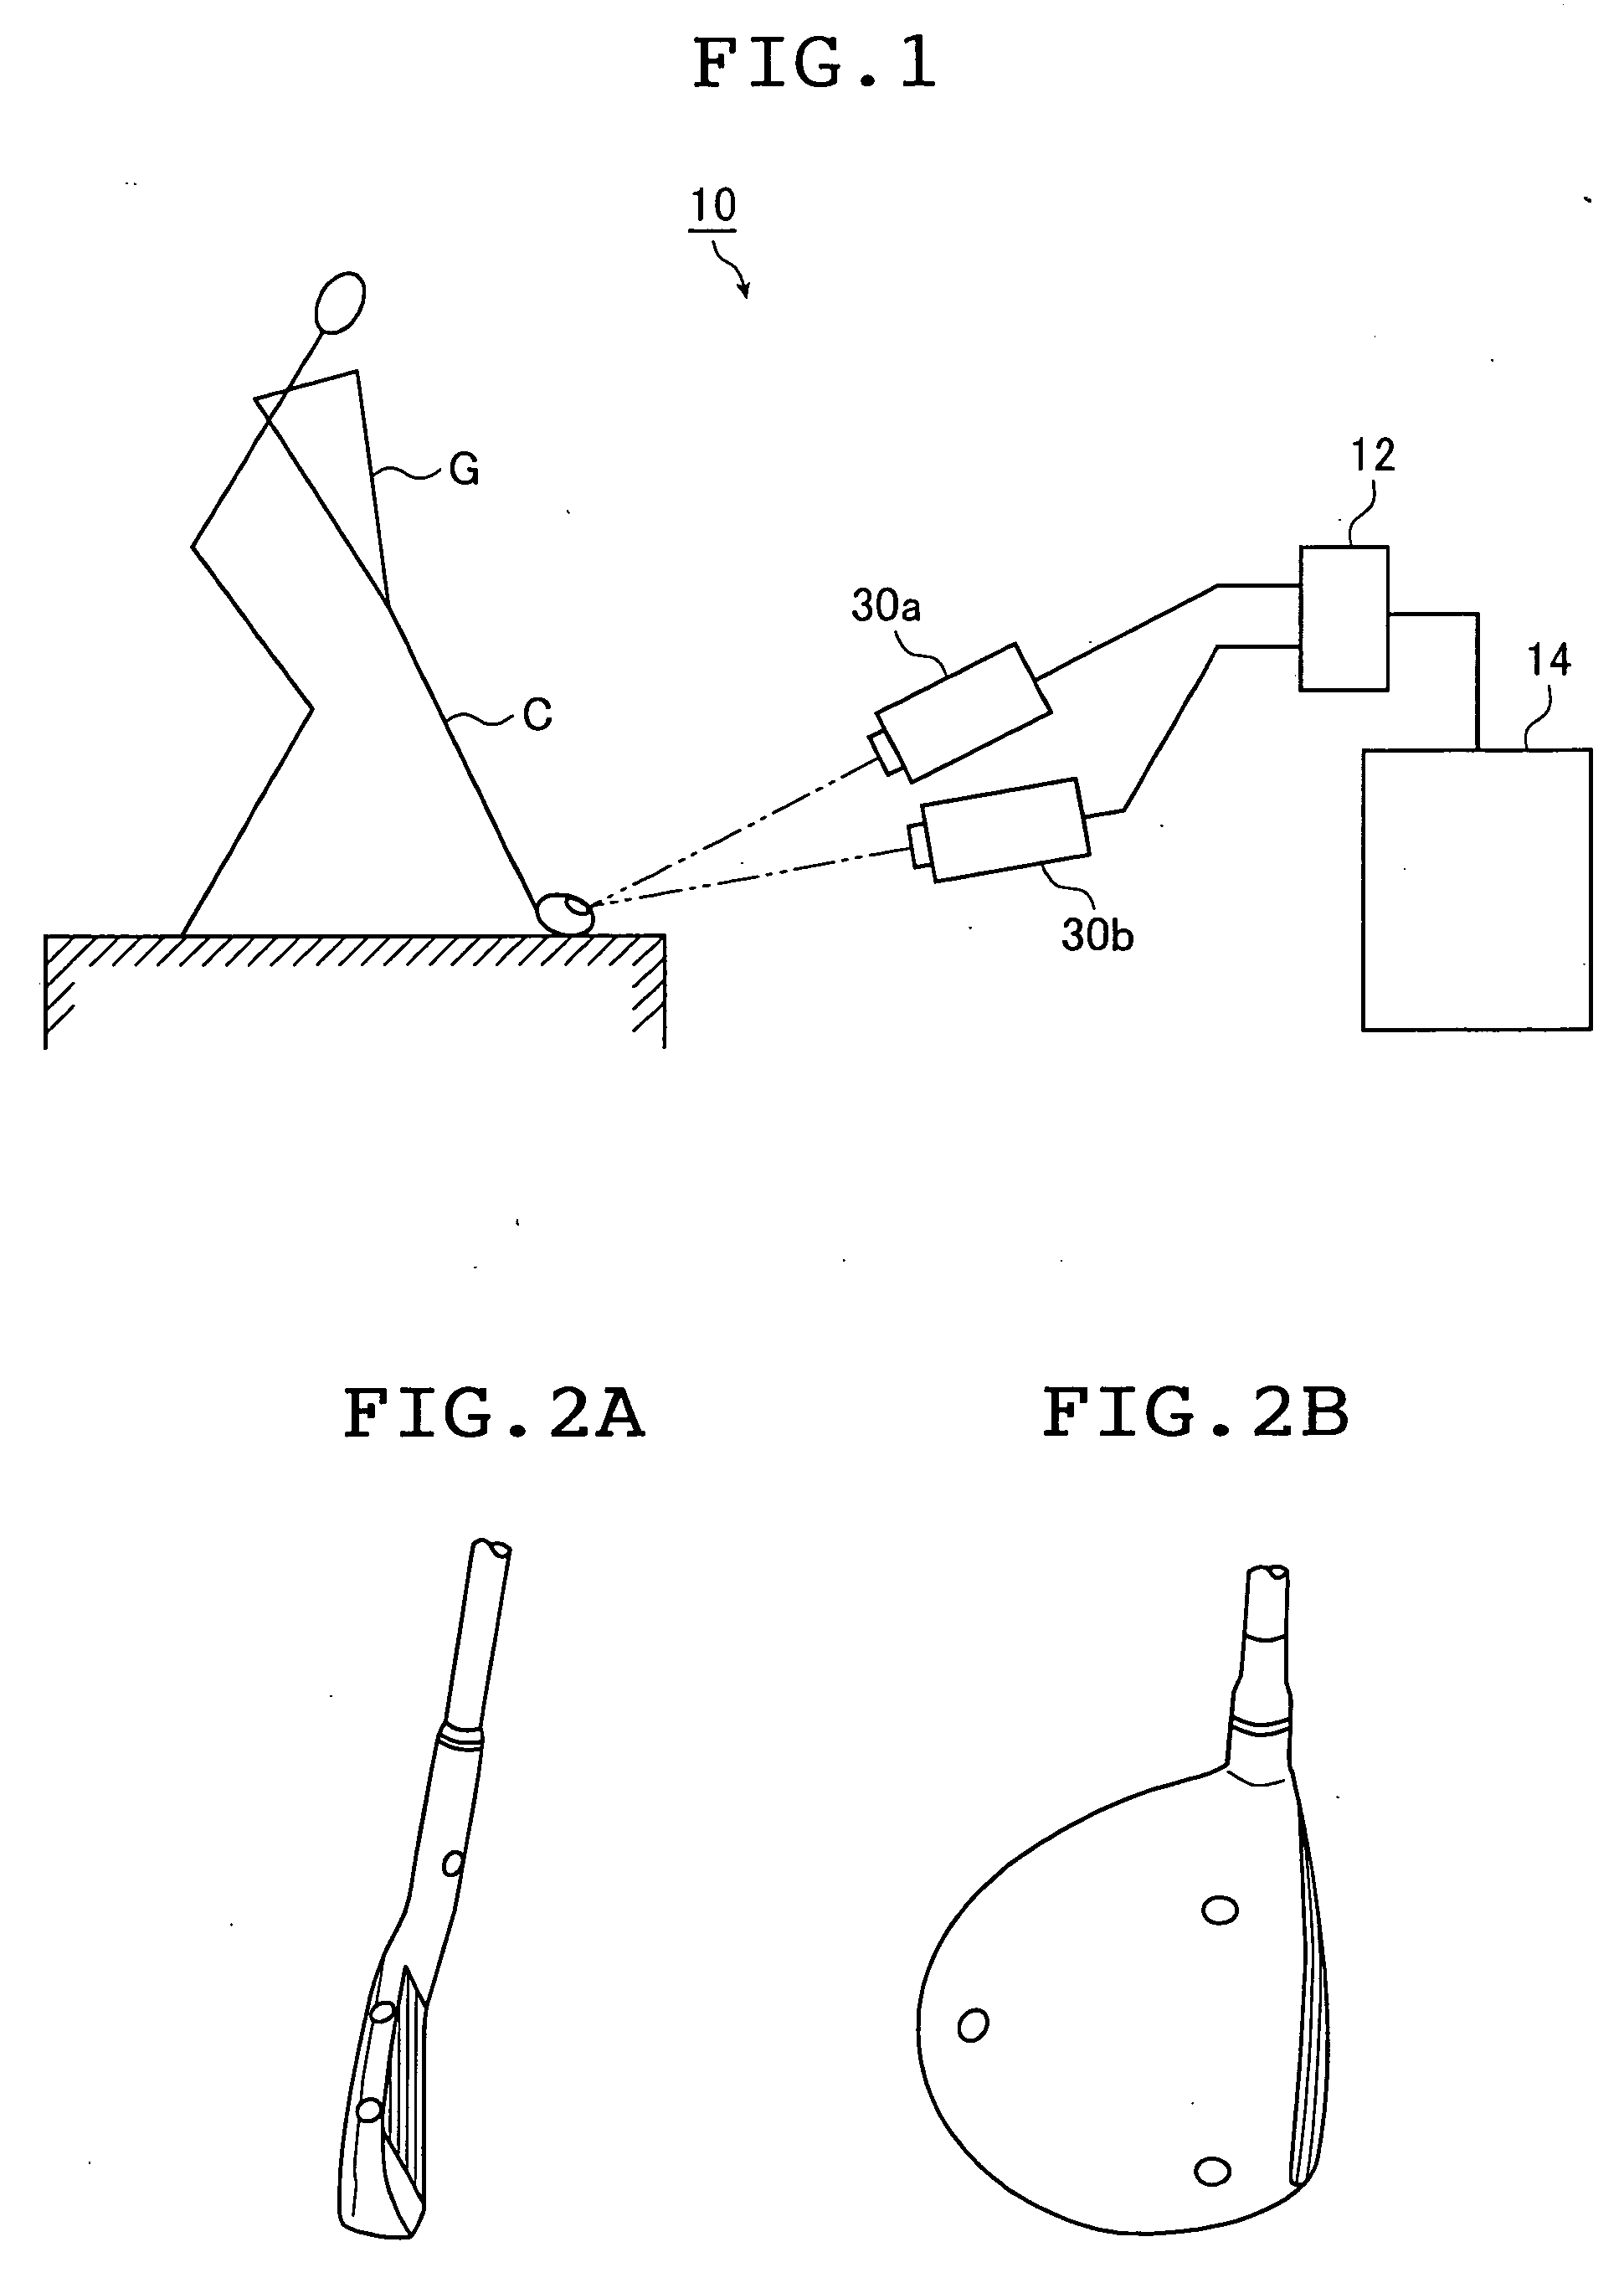 Moving body measuring apparatus